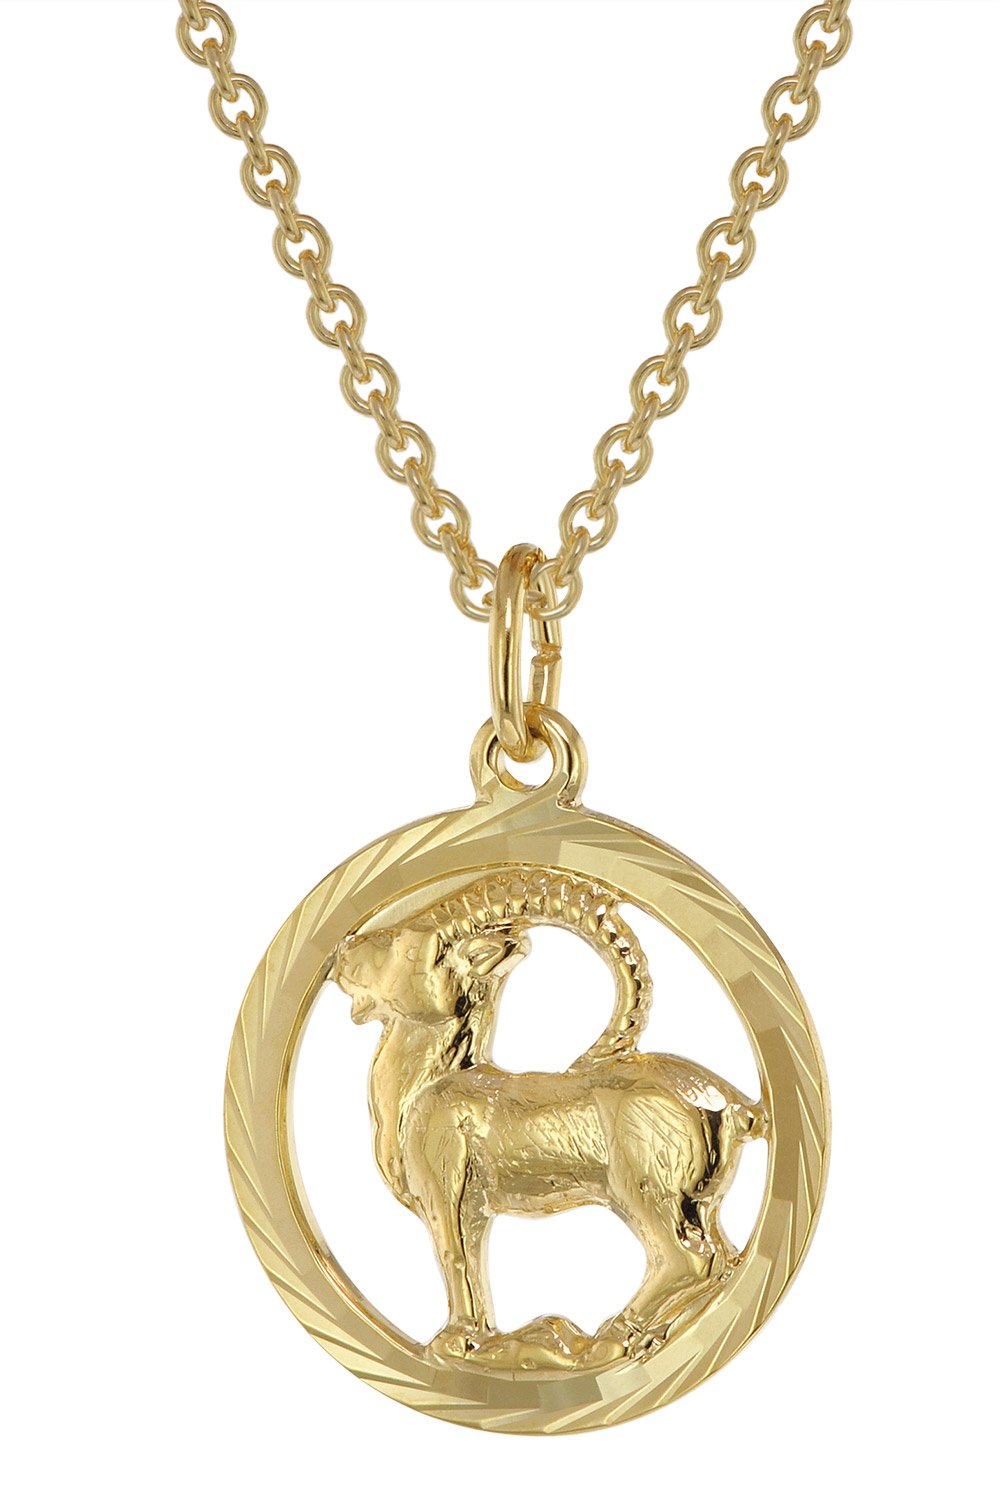 Cute Zodiac Necklace - Capricorn Necklace - Gold Necklace - $12.00 - Lulus